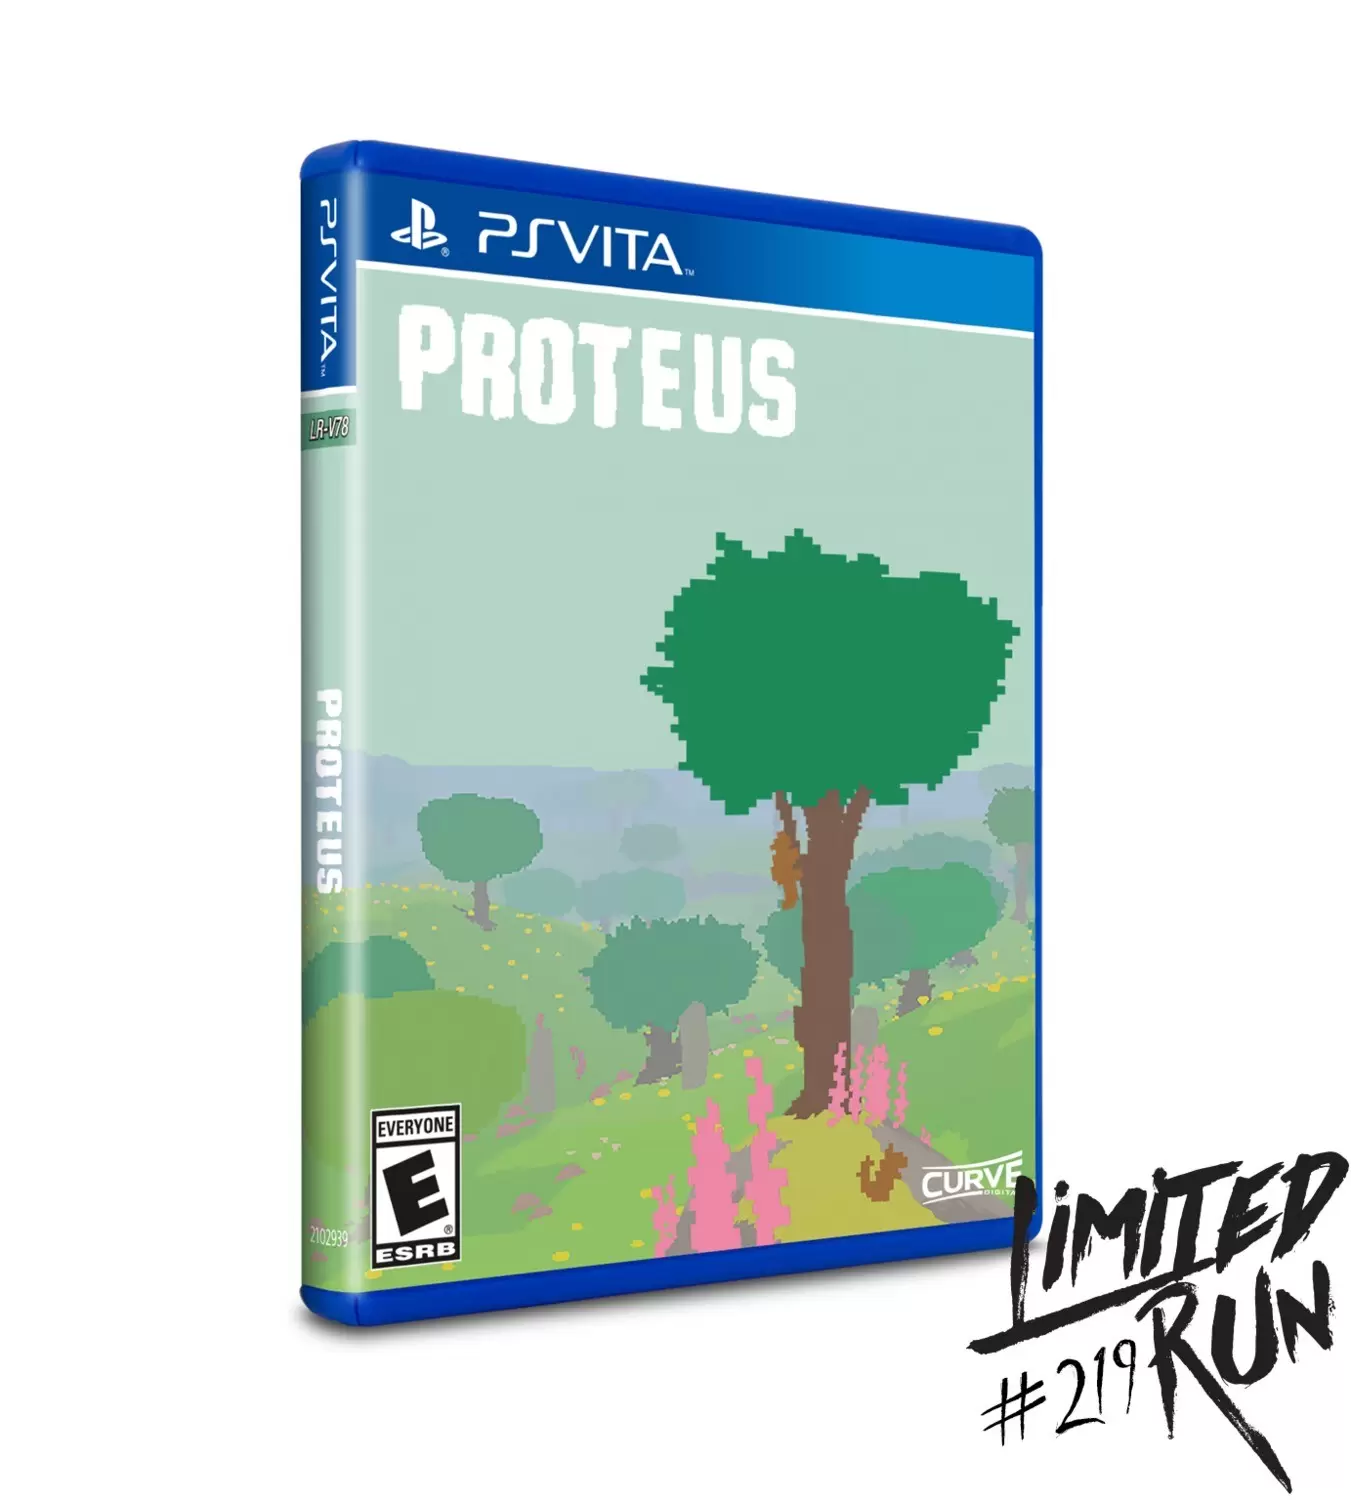 PS Vita Games - Proteus